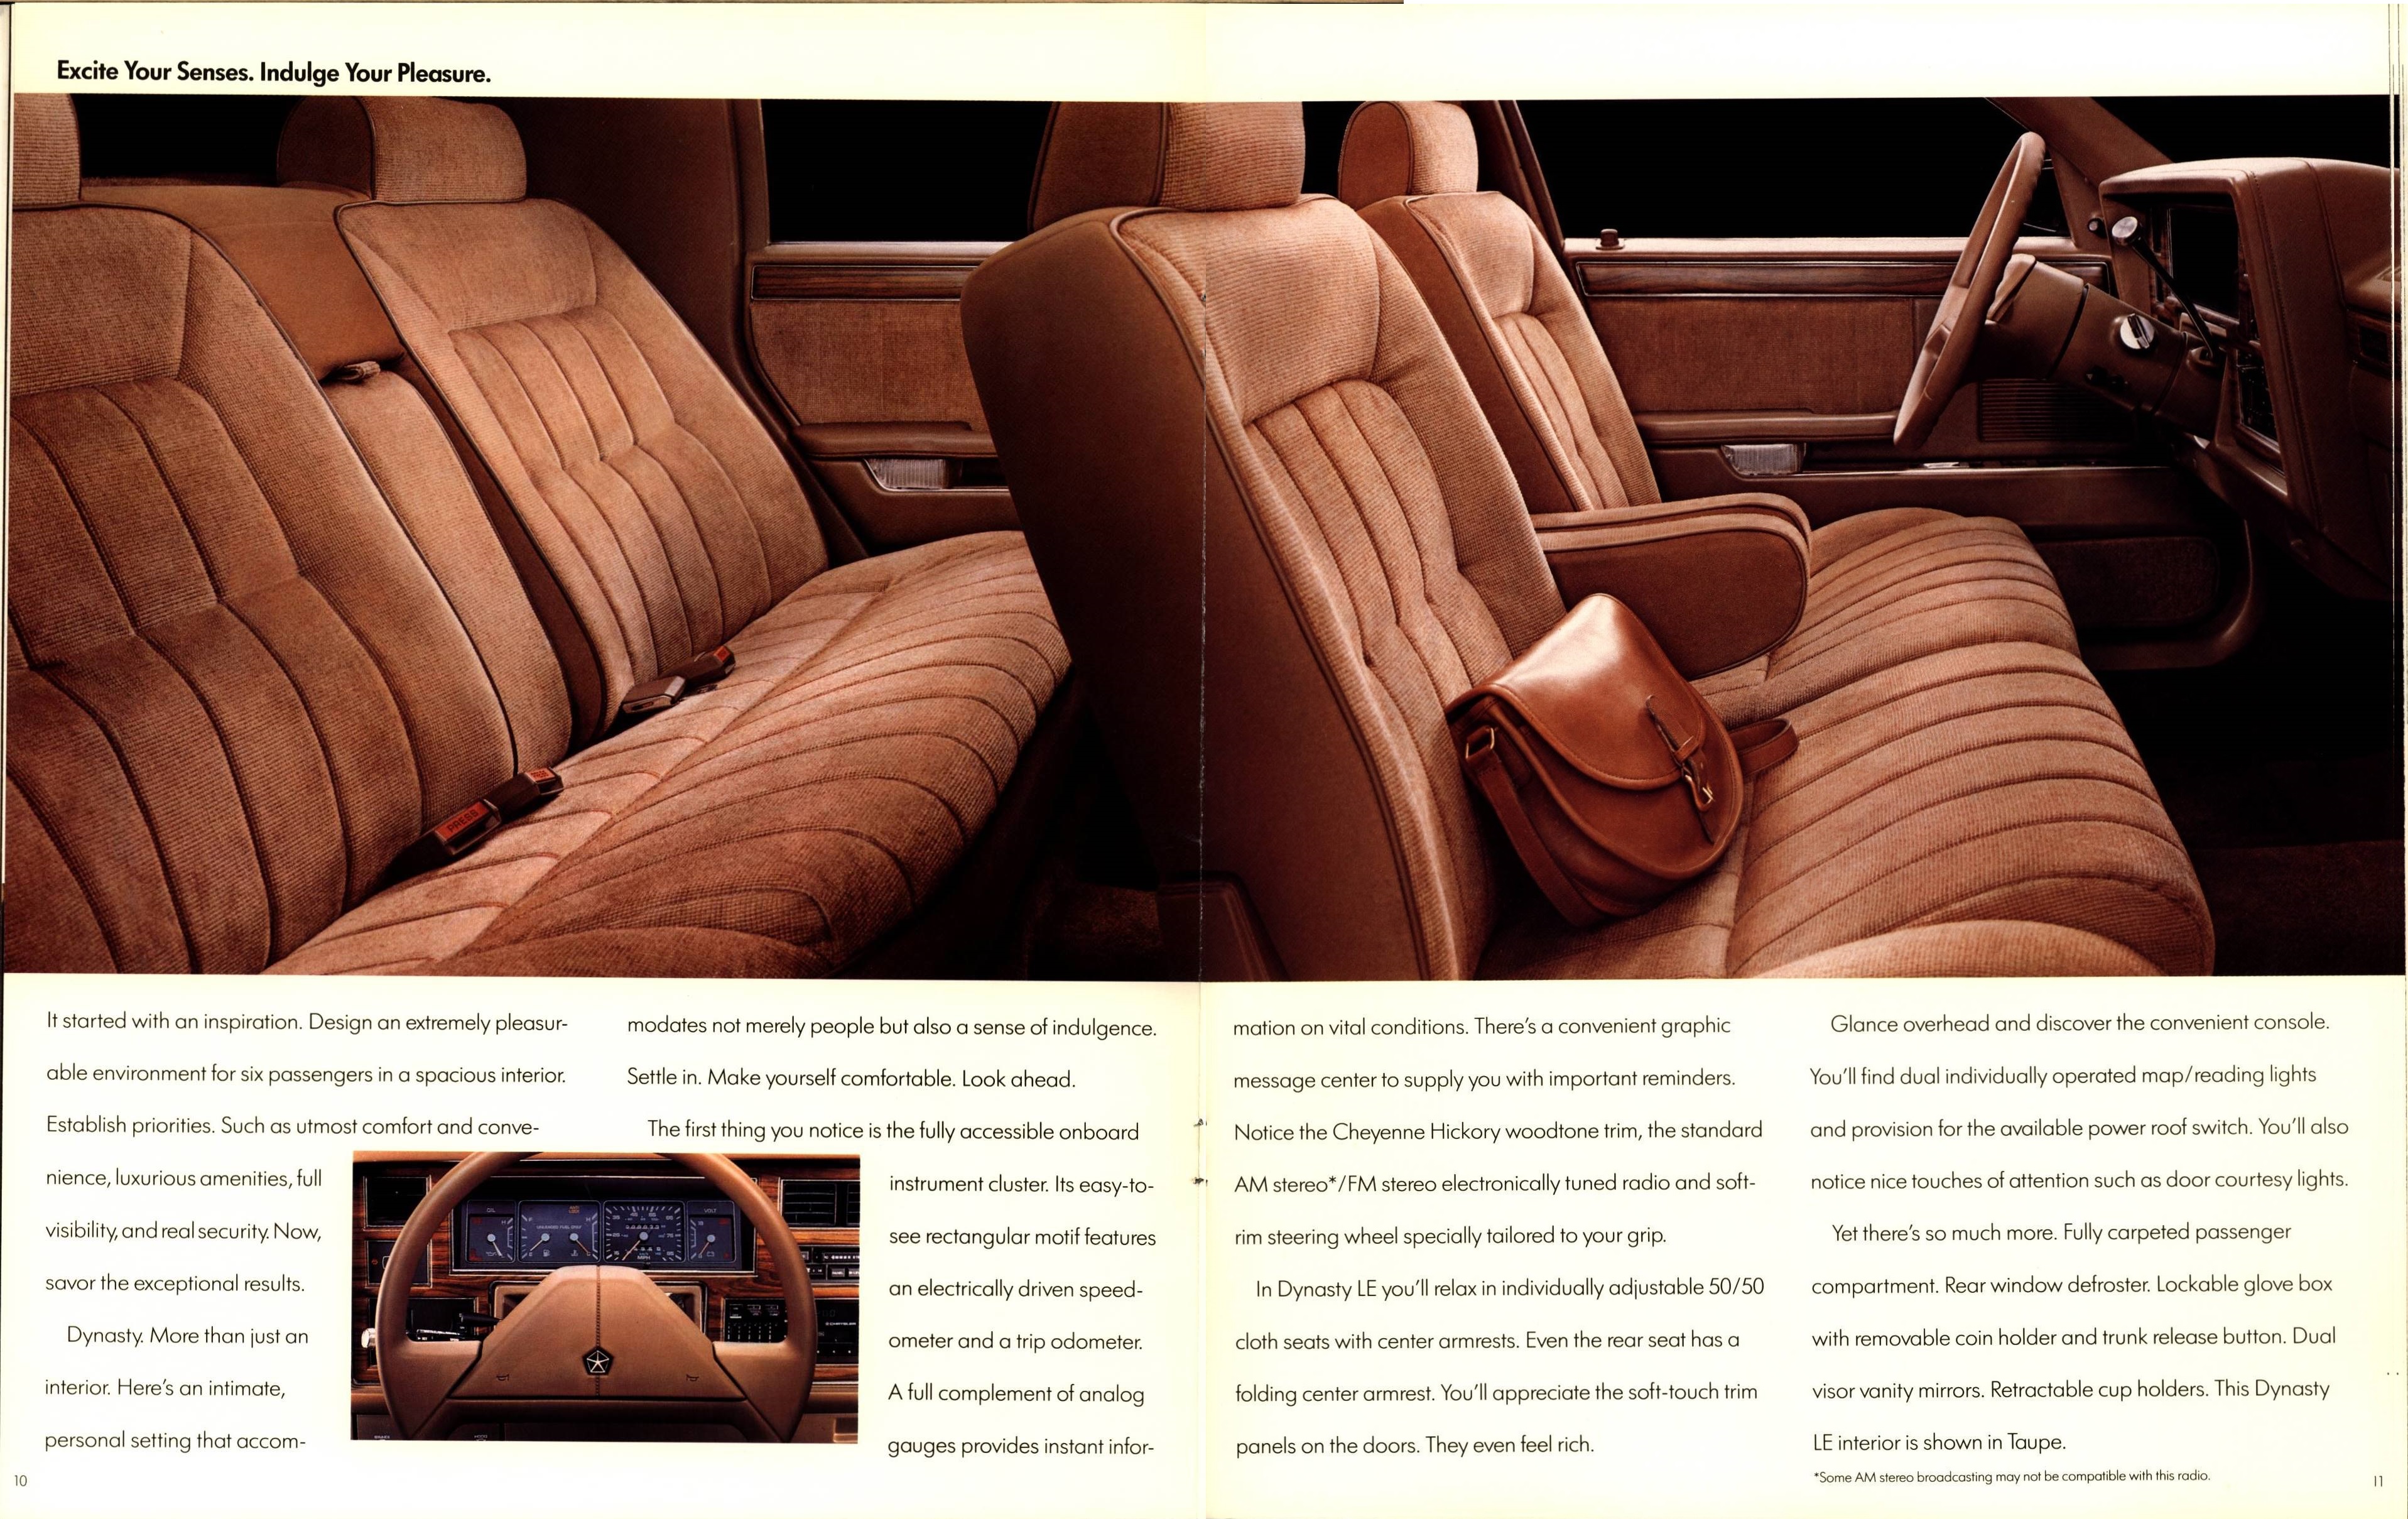 1988 Dodge Dynasty Brochure 10-11